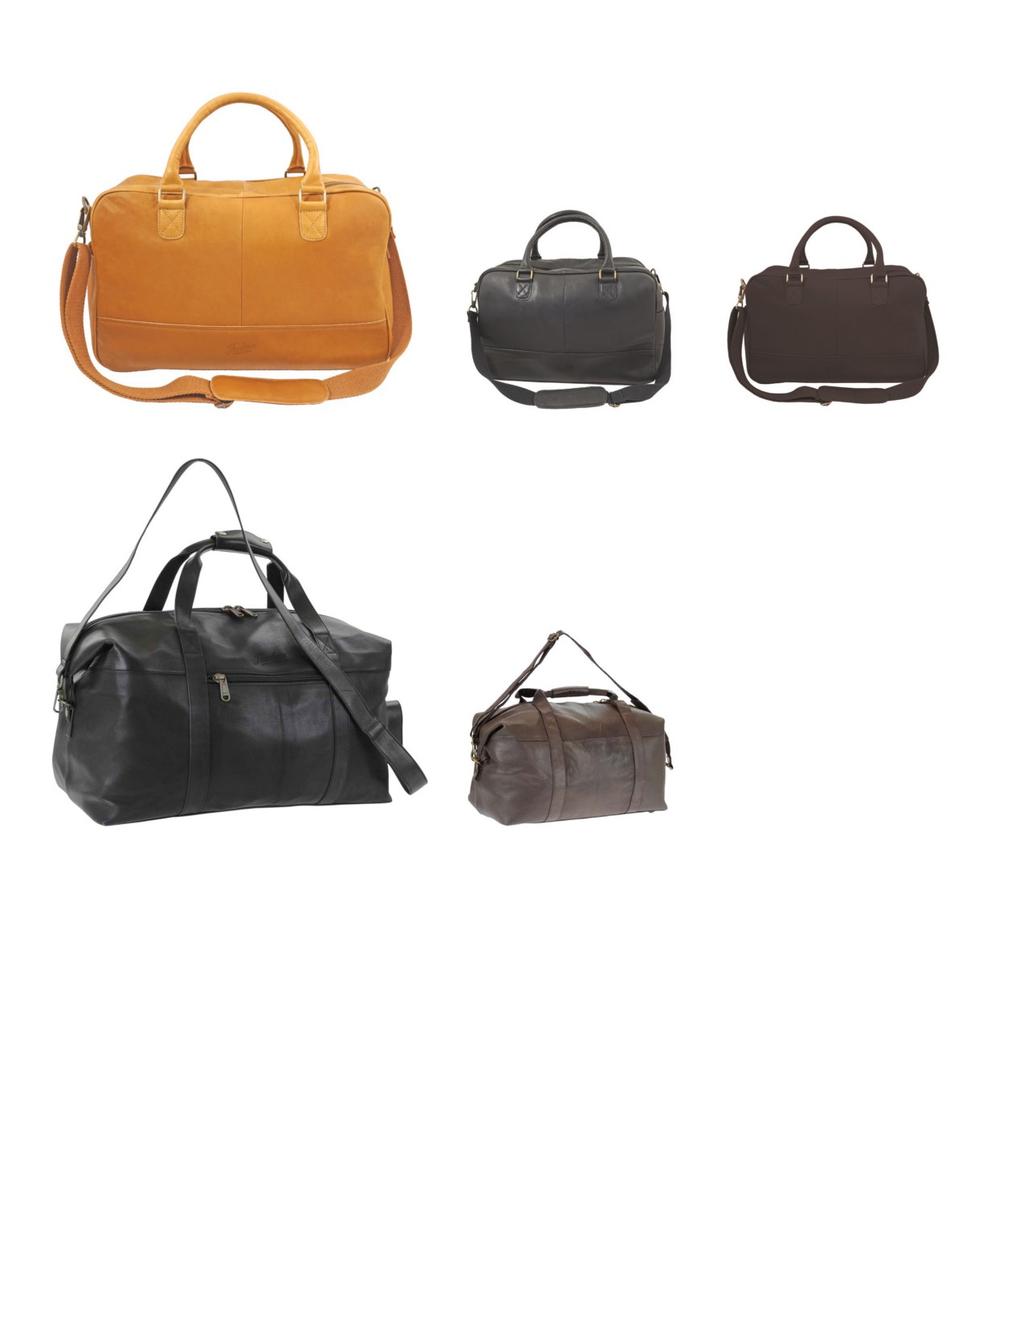 FL#4-438-1H Waxy vachetta leather double handle duffle bag. 12 x 20 x 8.